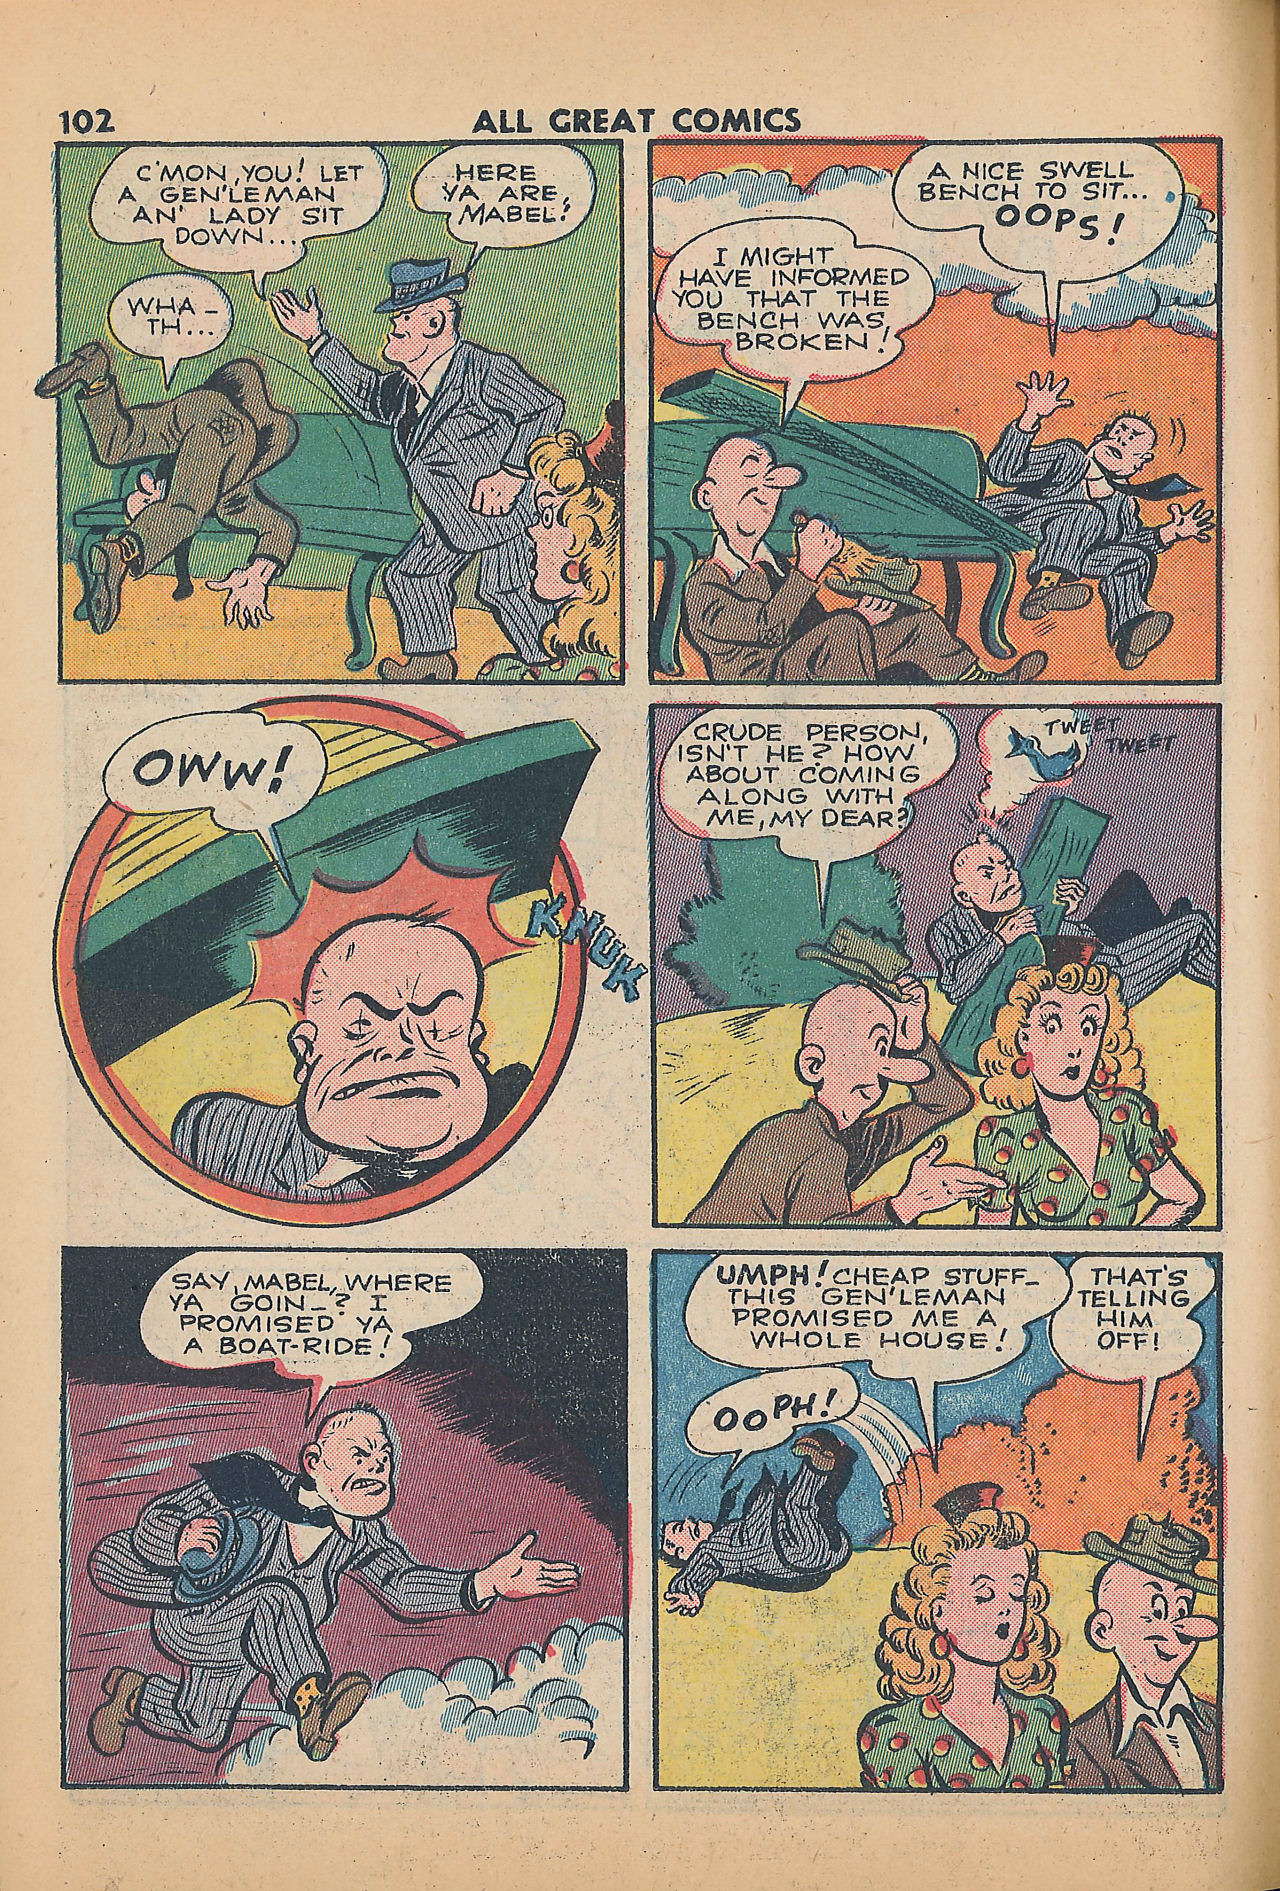 Read online All Great Comics (1945) comic -  Issue # TPB - 104